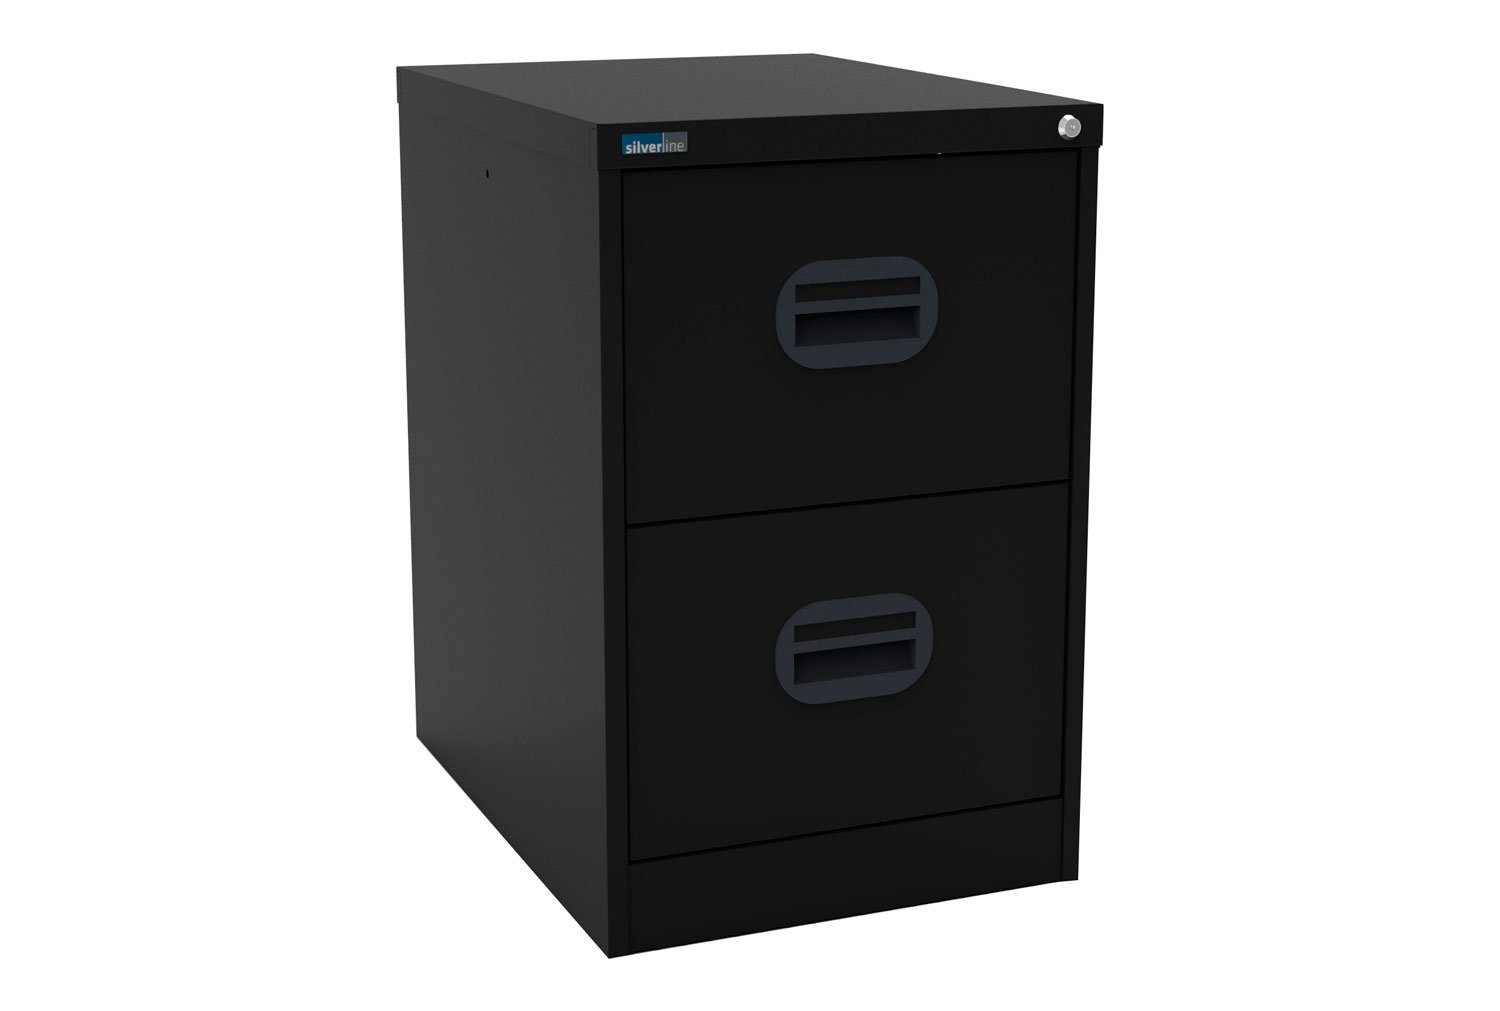 Silverline Kontrax 2 Drawer Filing Cabinet, 2 Drawer - 46wx62dx71h (cm), Black